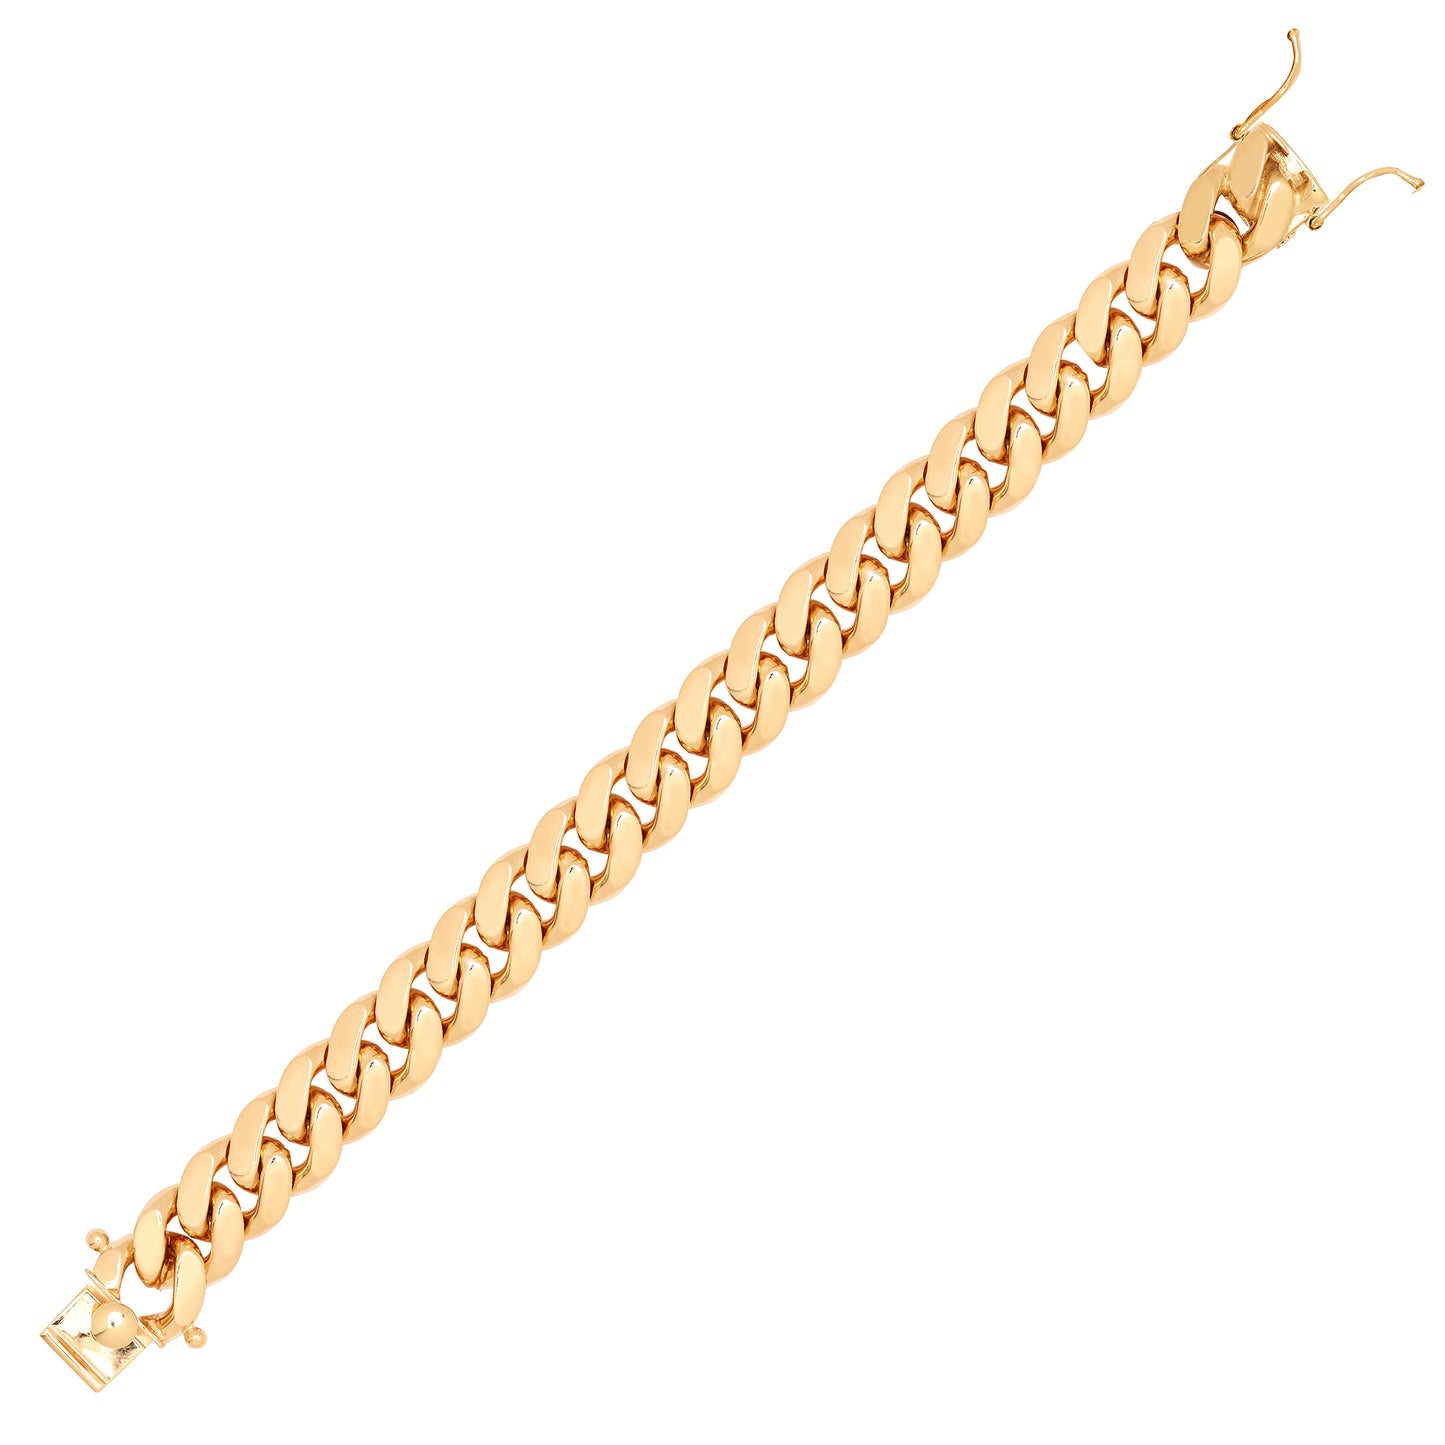 9ct Gold  Domed Cuban Curb 14mm Chain Link Bracelet, 10 inch 25cm - JCN090D